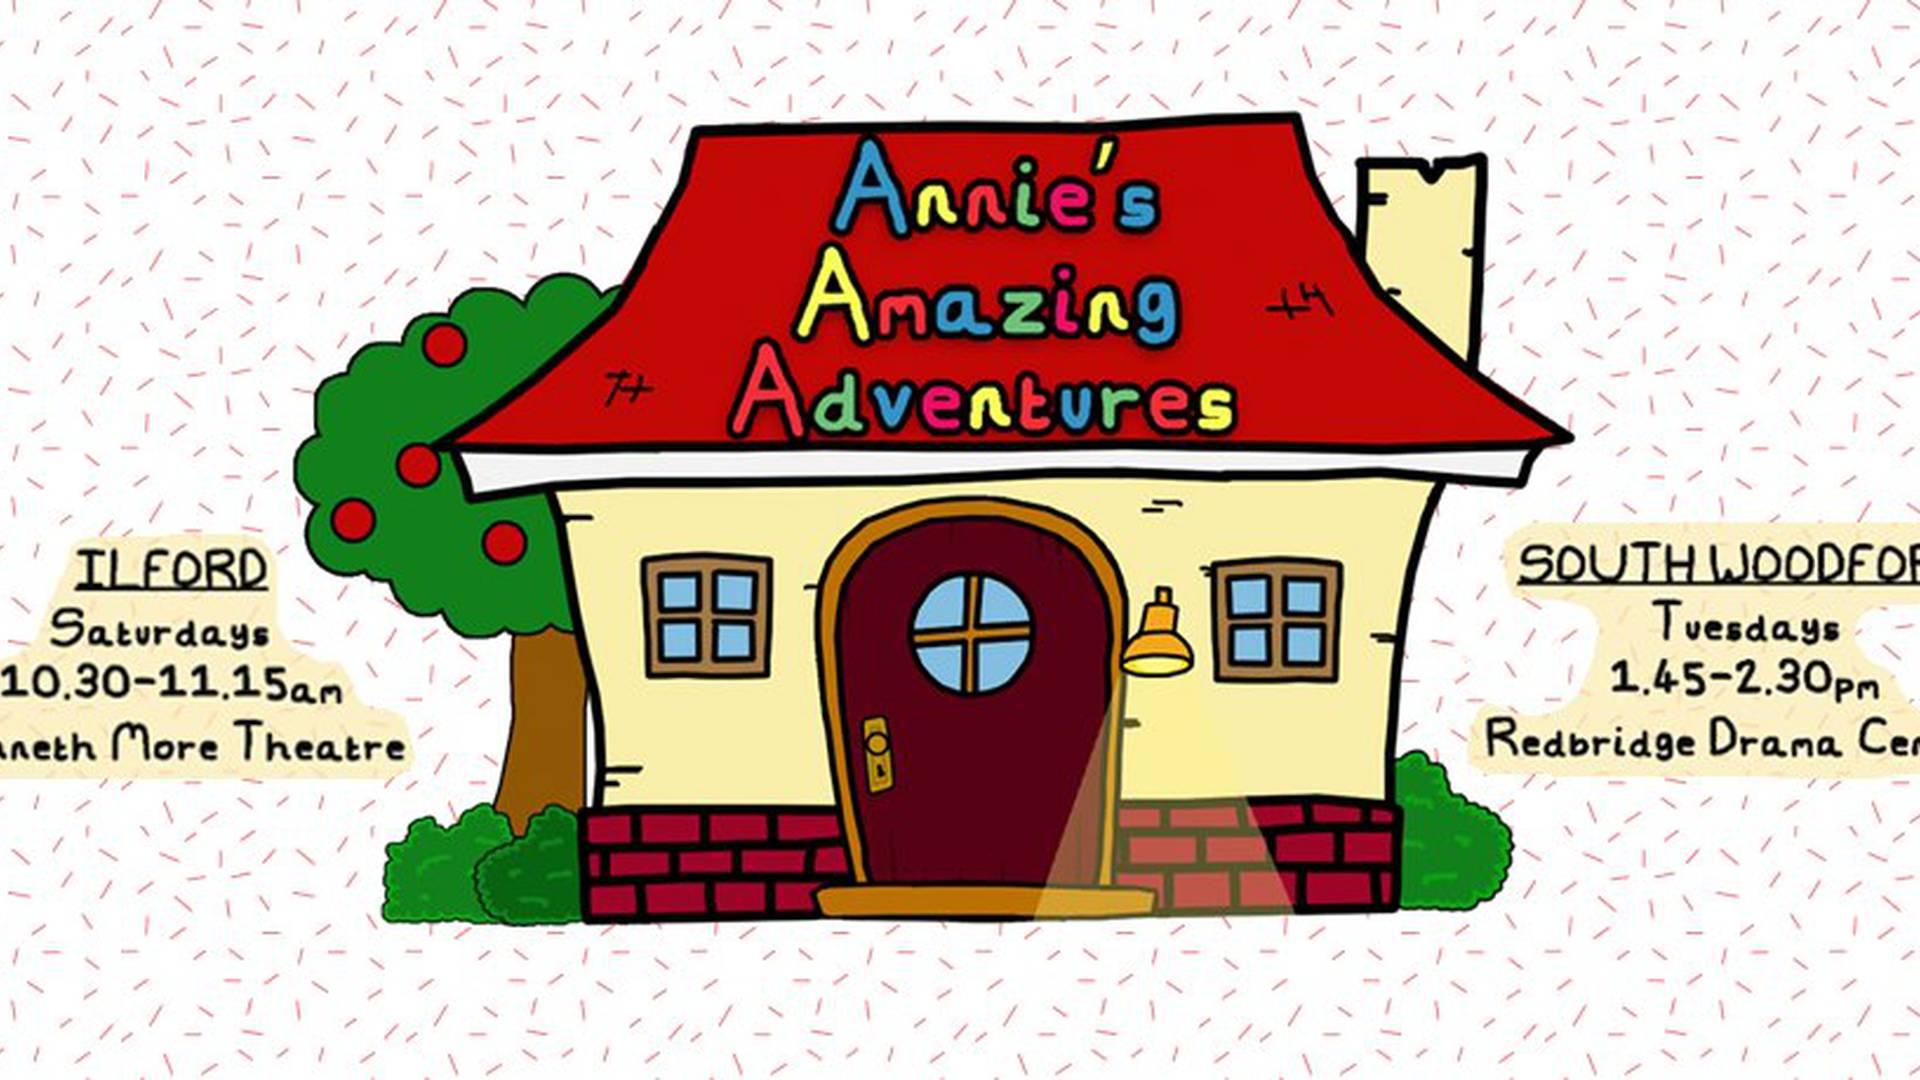 Annie's Amazing Adventures photo